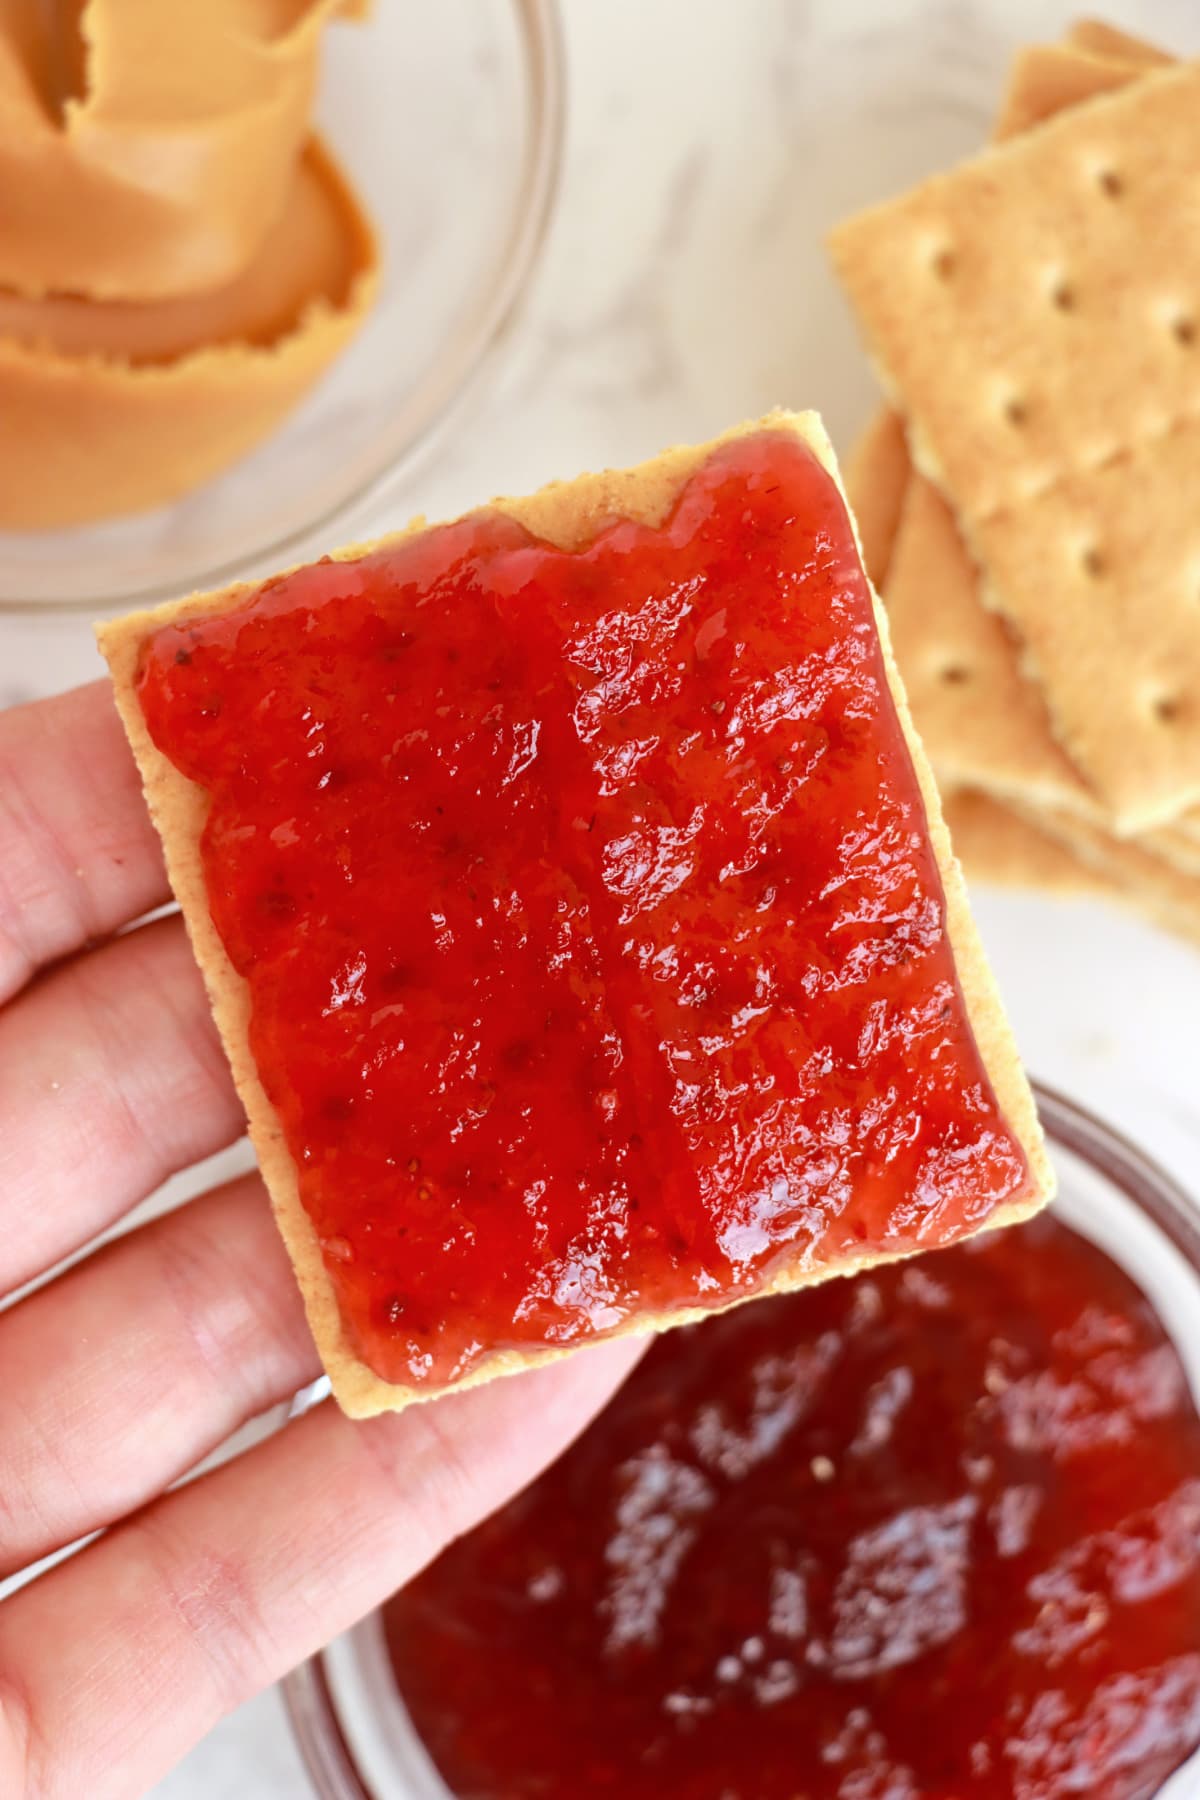 Peanut butter and jelly graham cracker sandwich.